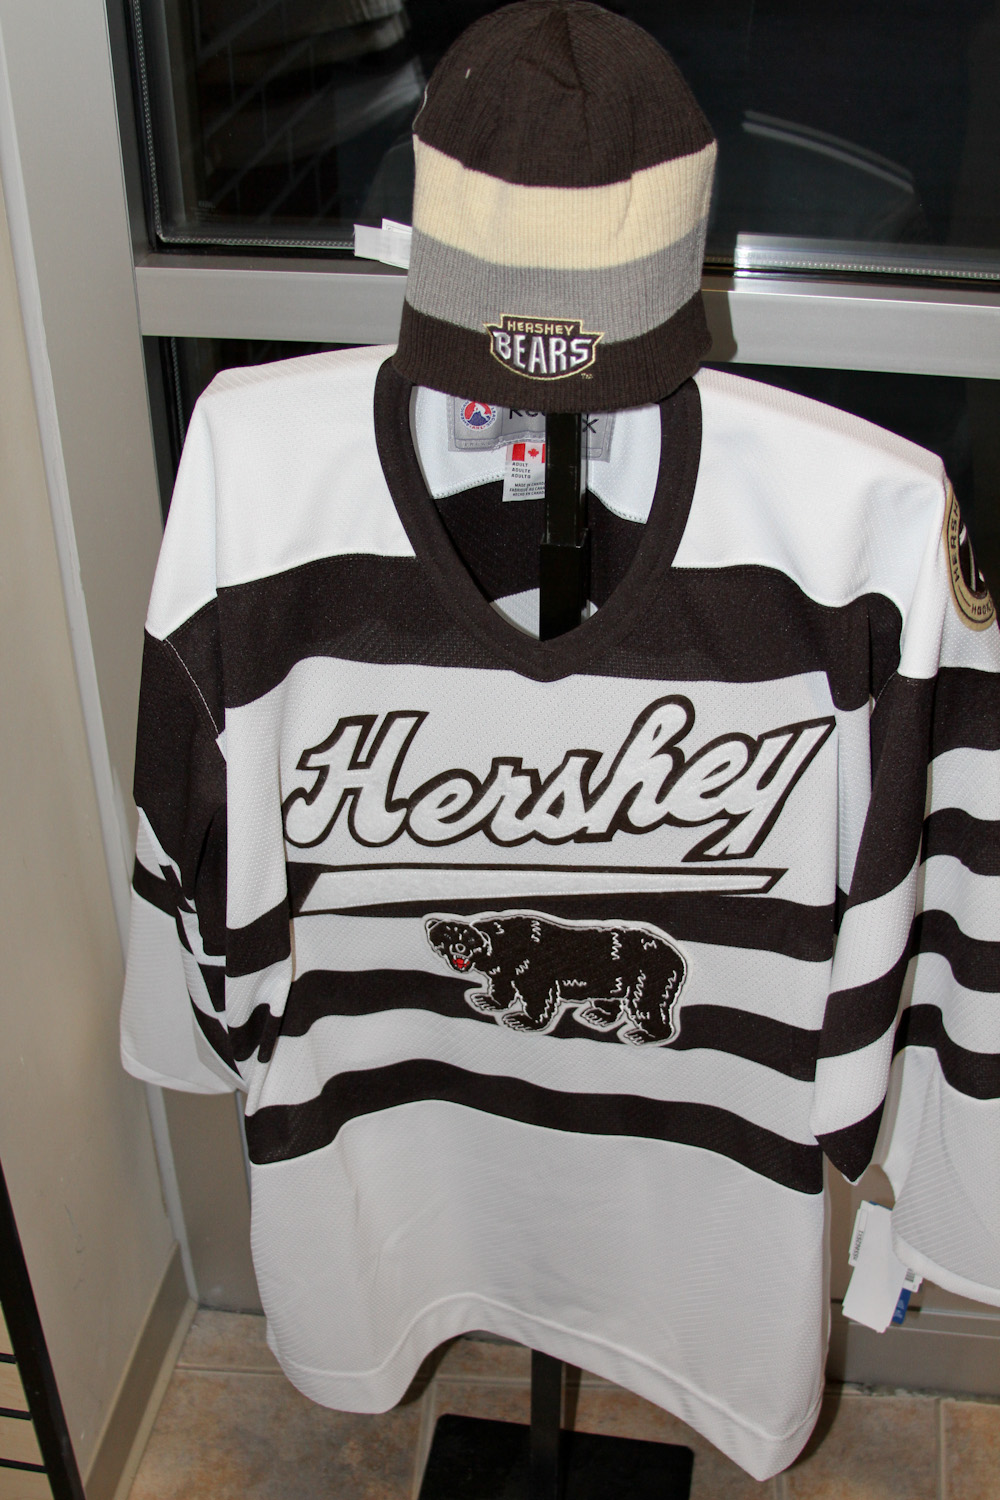 hershey bears jersey history